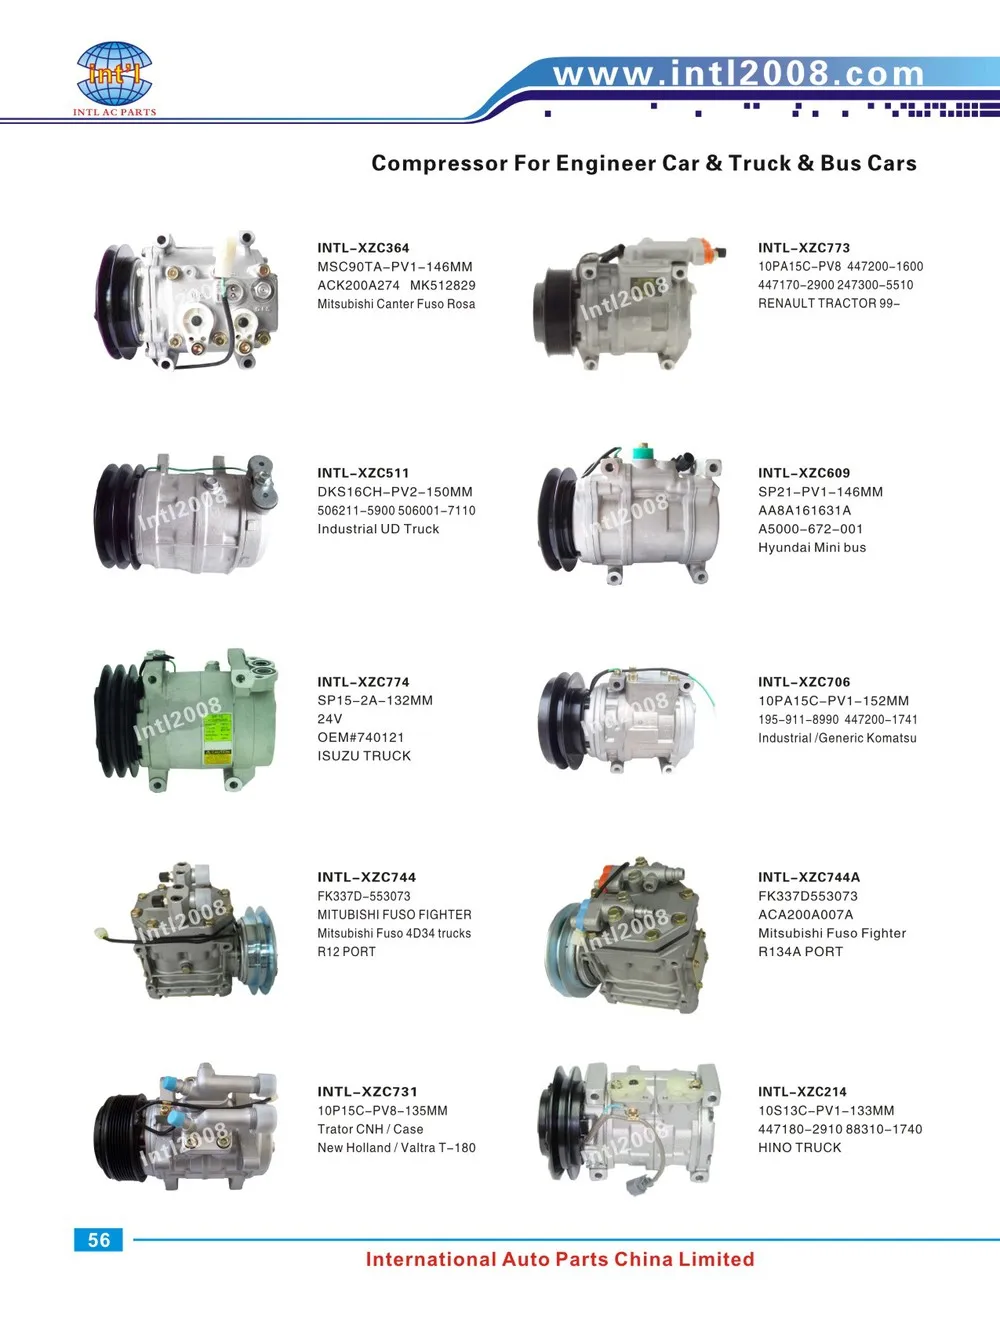 DKS-17CH For Nissan Caravan/Urvan E25 auto air conditioning compressor 506012-0160 506211-8270 92600-VW100